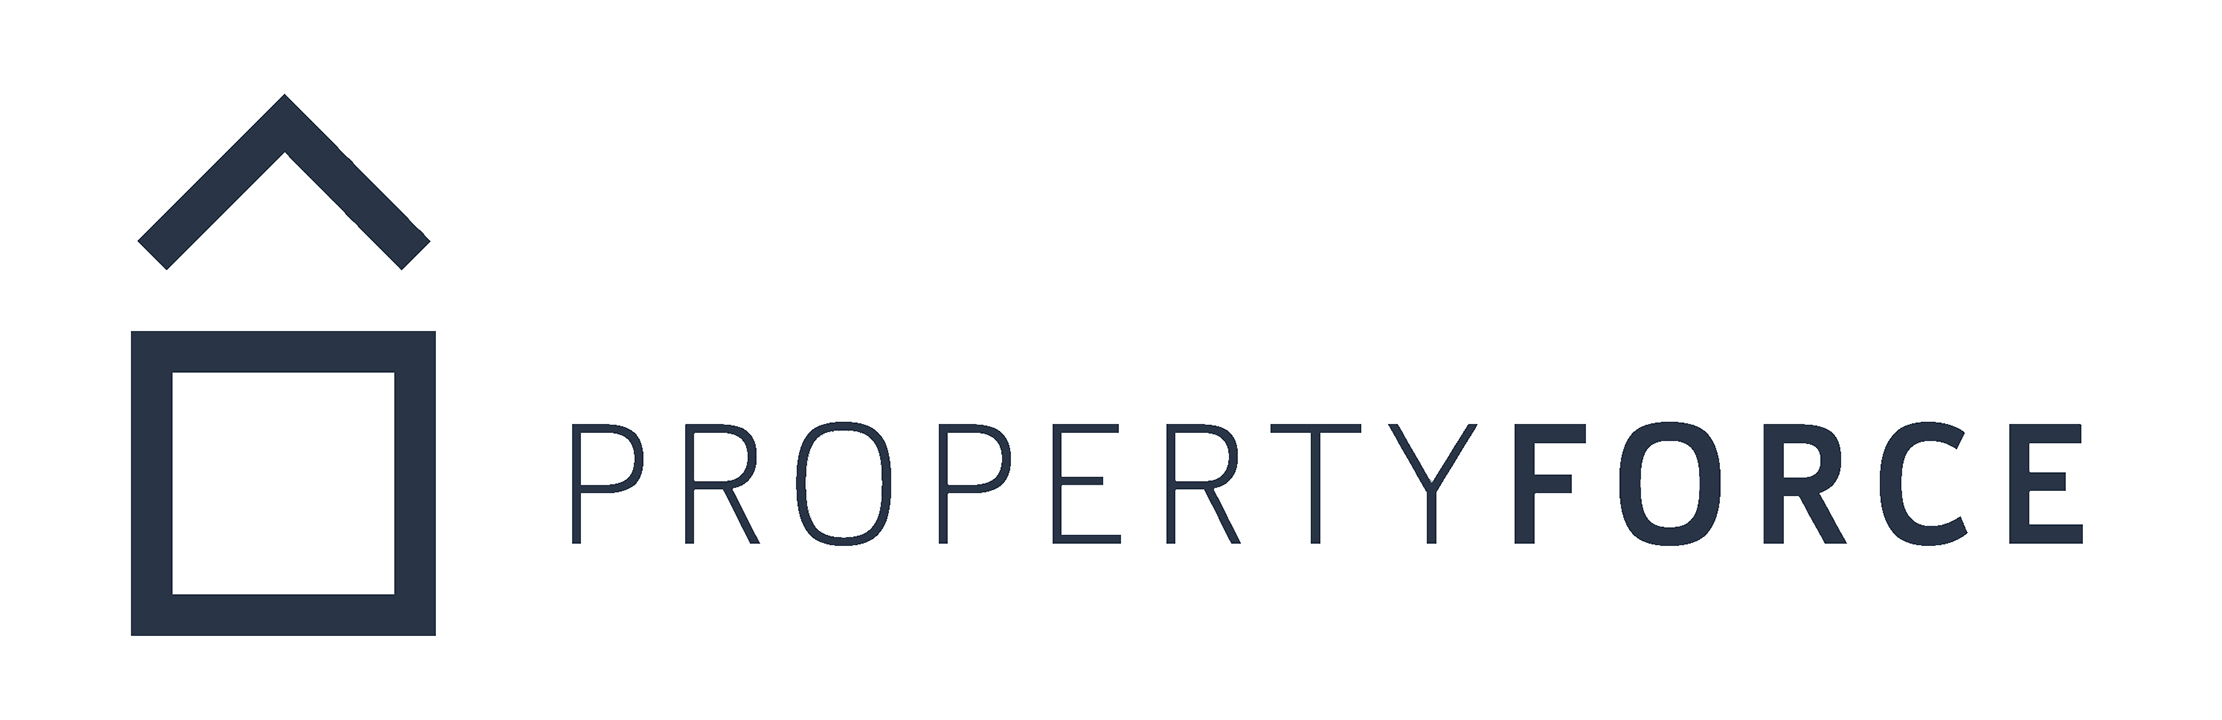 PropertyForce Company Logo